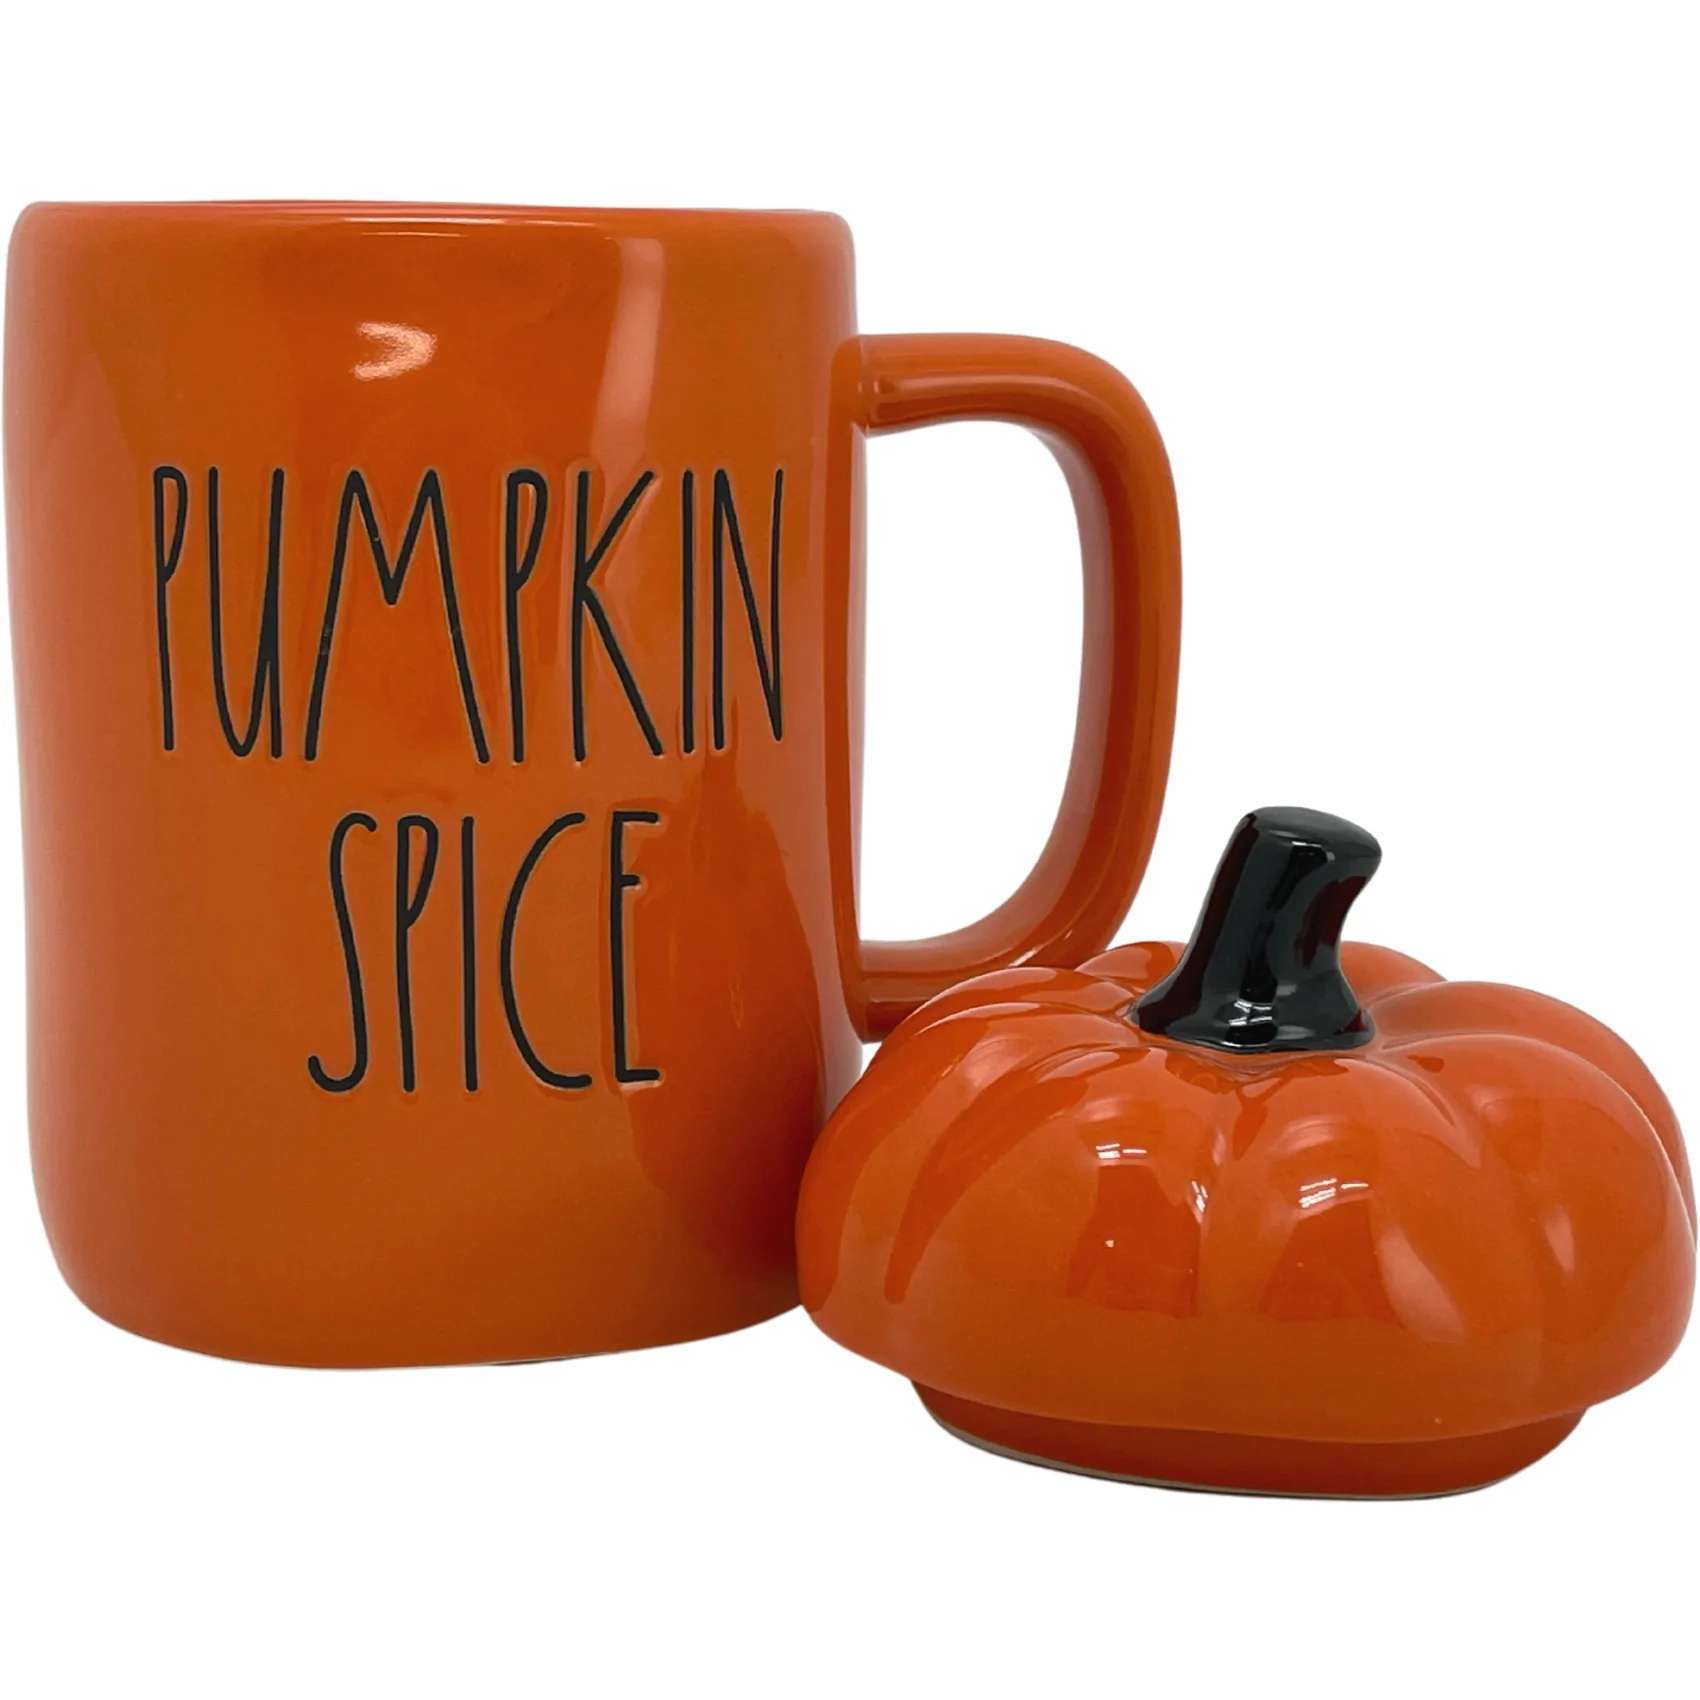 Rae Dunn "Pumpkin Spice" Coffee Mug / Ceramic Mug with Pumpkin Topper / Orange & Black